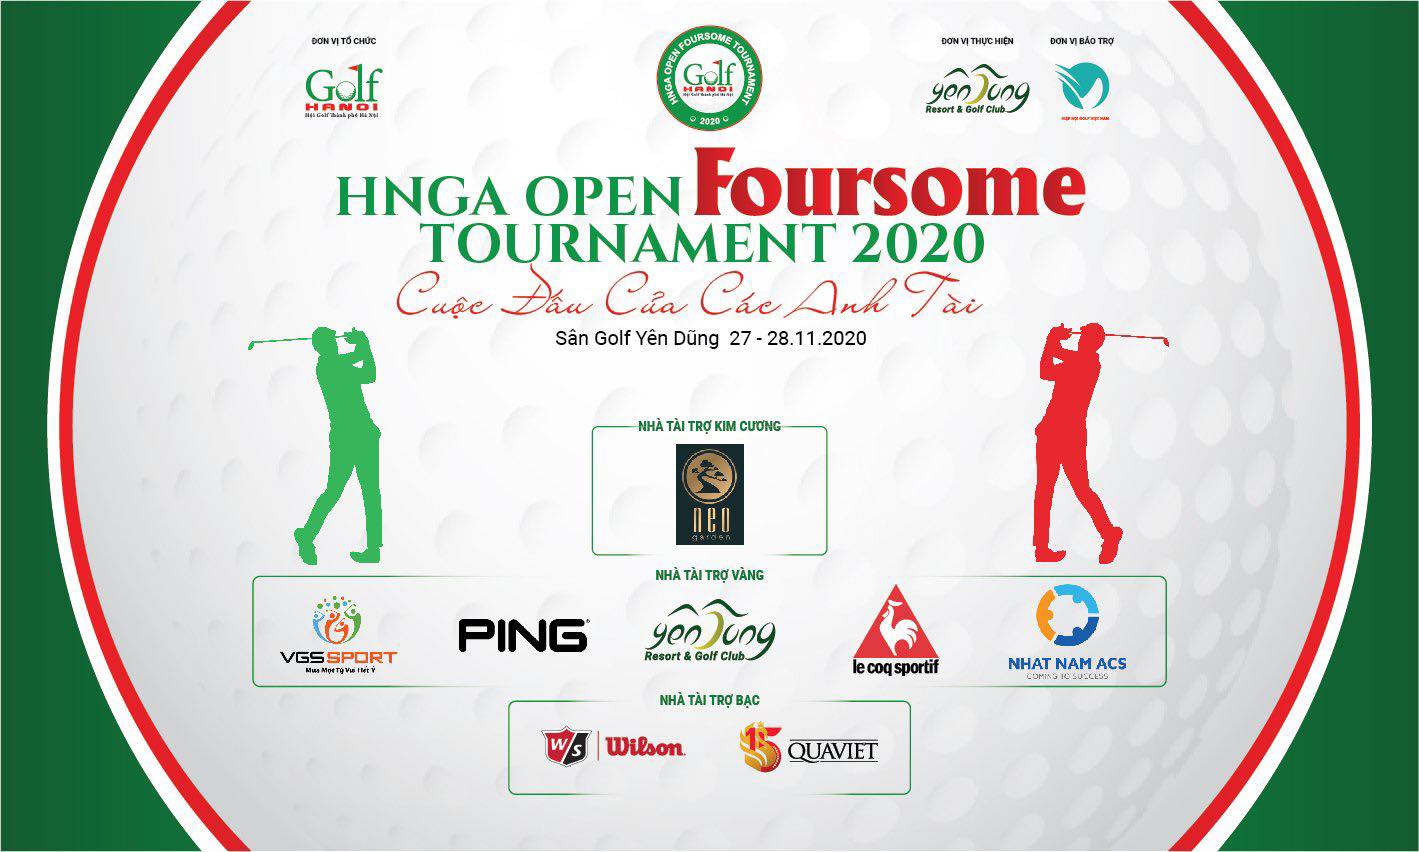 Danh sách chia cặp Giải golf "HNGA Open Foursome Tournament 2020"